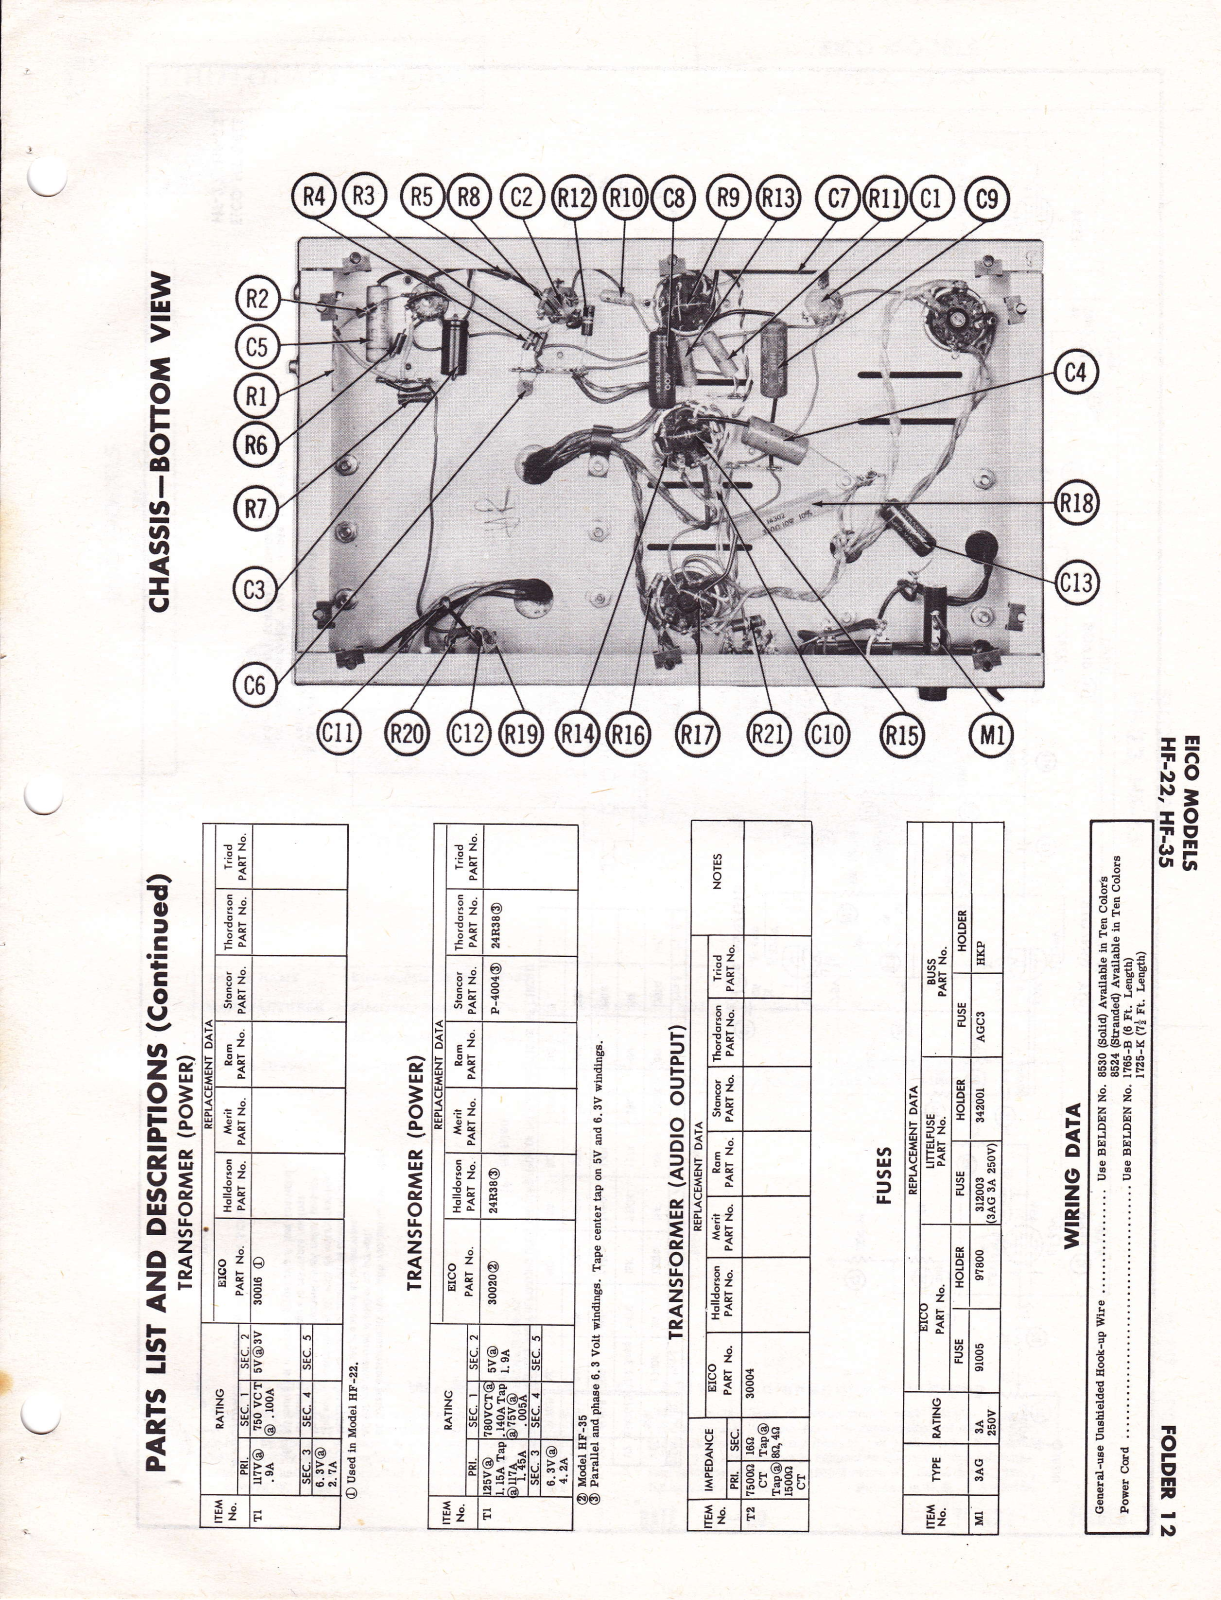 Eico HF-22 Service Manual